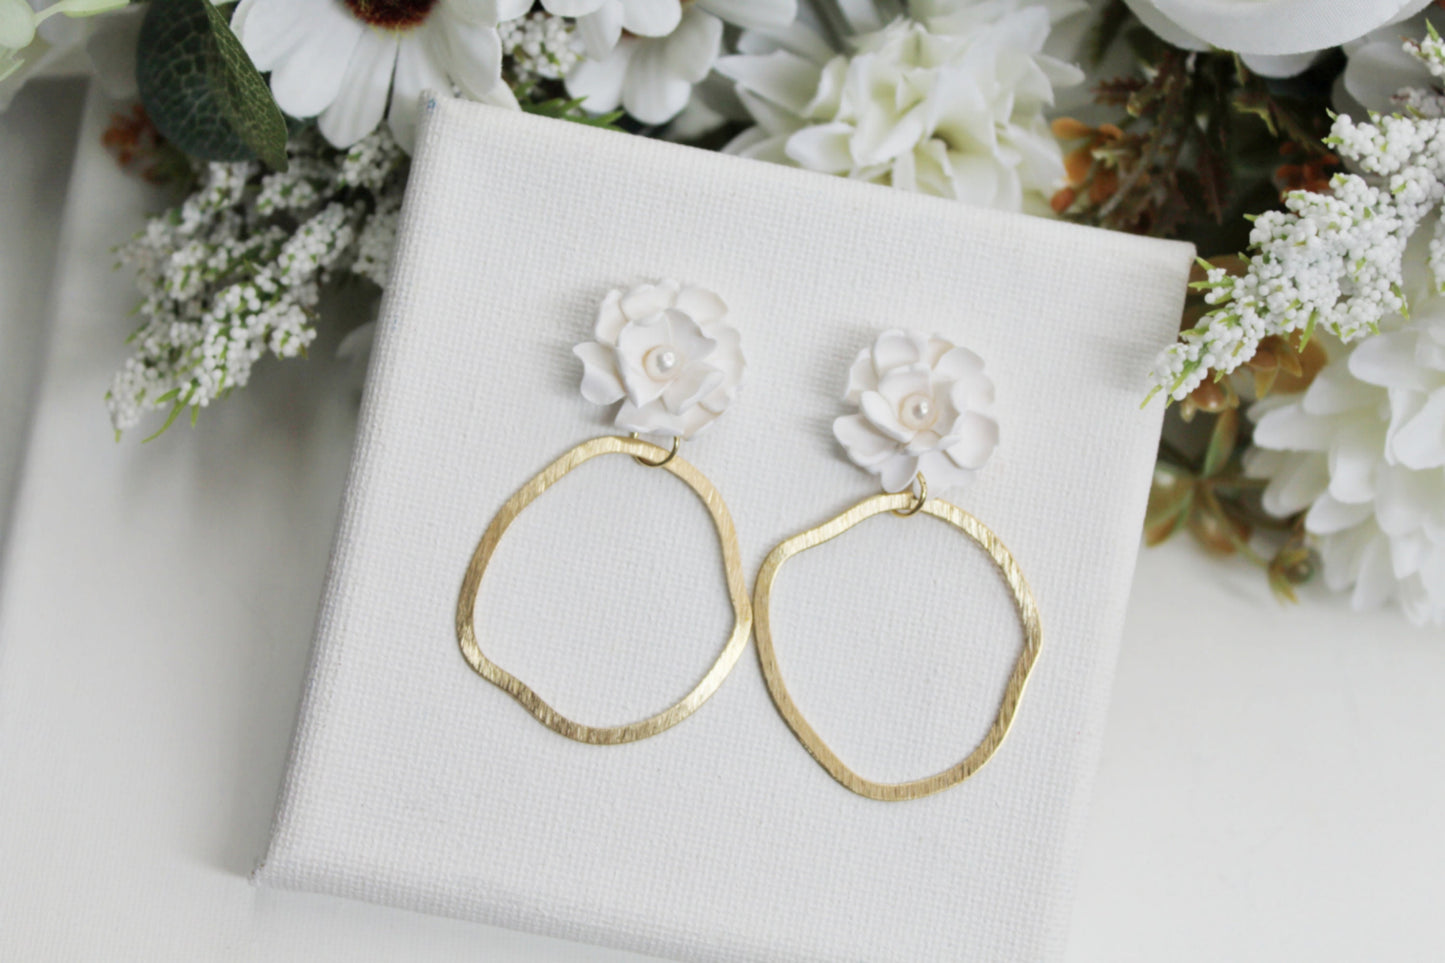 Bridal Flower Earrings, Wedding Earrings, White, Floral Earrings, Flower Earrings, Polymer Clay Earrings, Spring Earrings, Earrings,Handmade